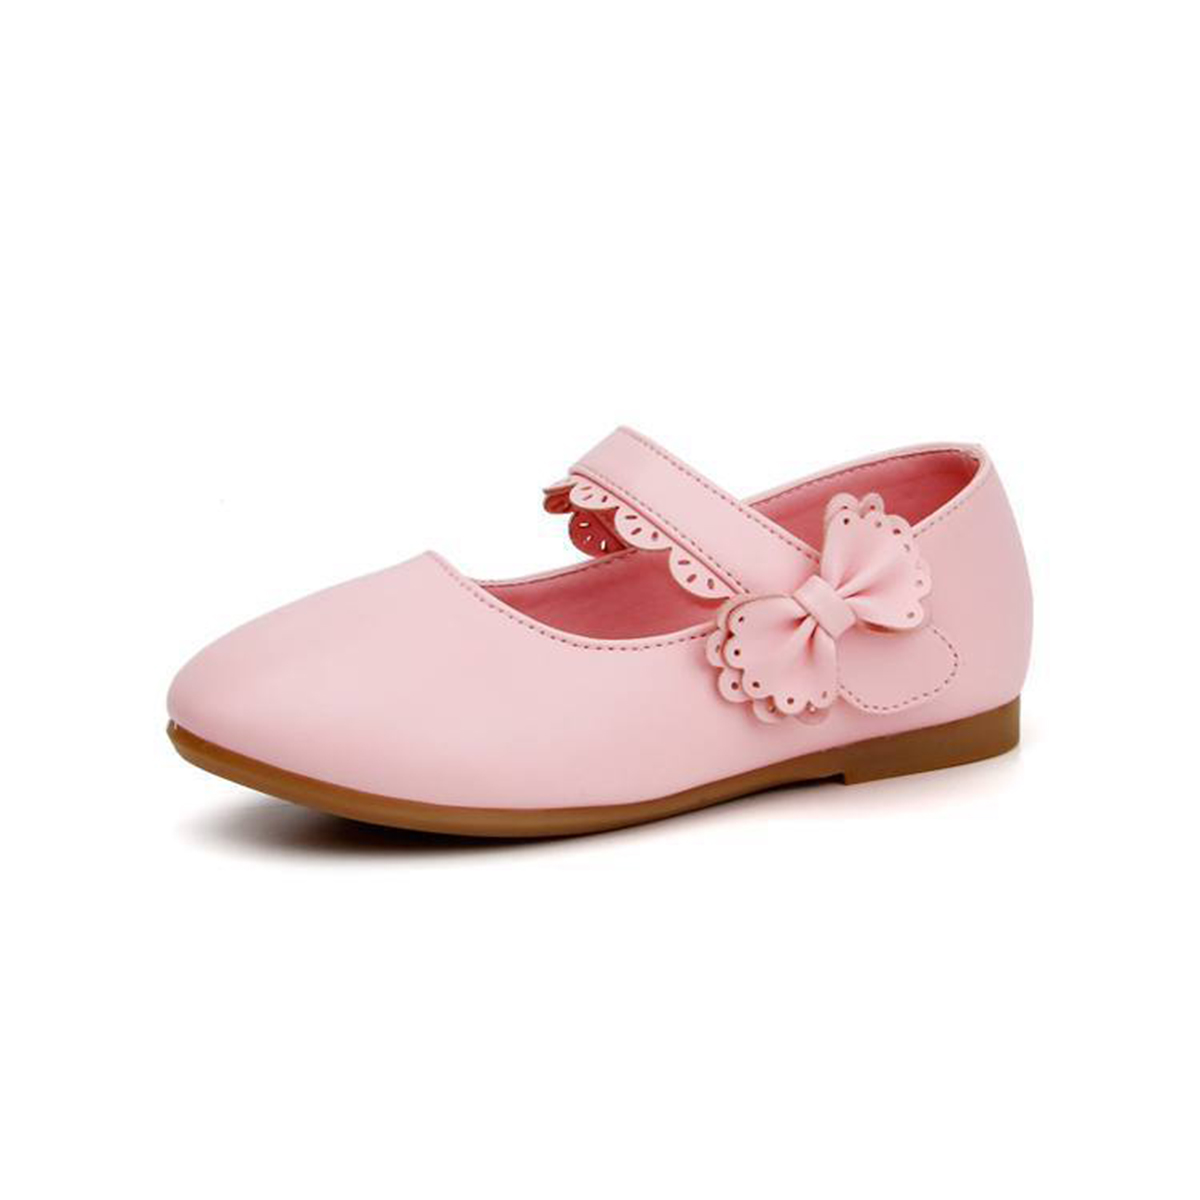 Hawee Ballet Flat Mary Jane Shoes Bowknot Princess Dress Shoes (Toddler Girls & Little Girls & Big Girls) - image 1 of 4